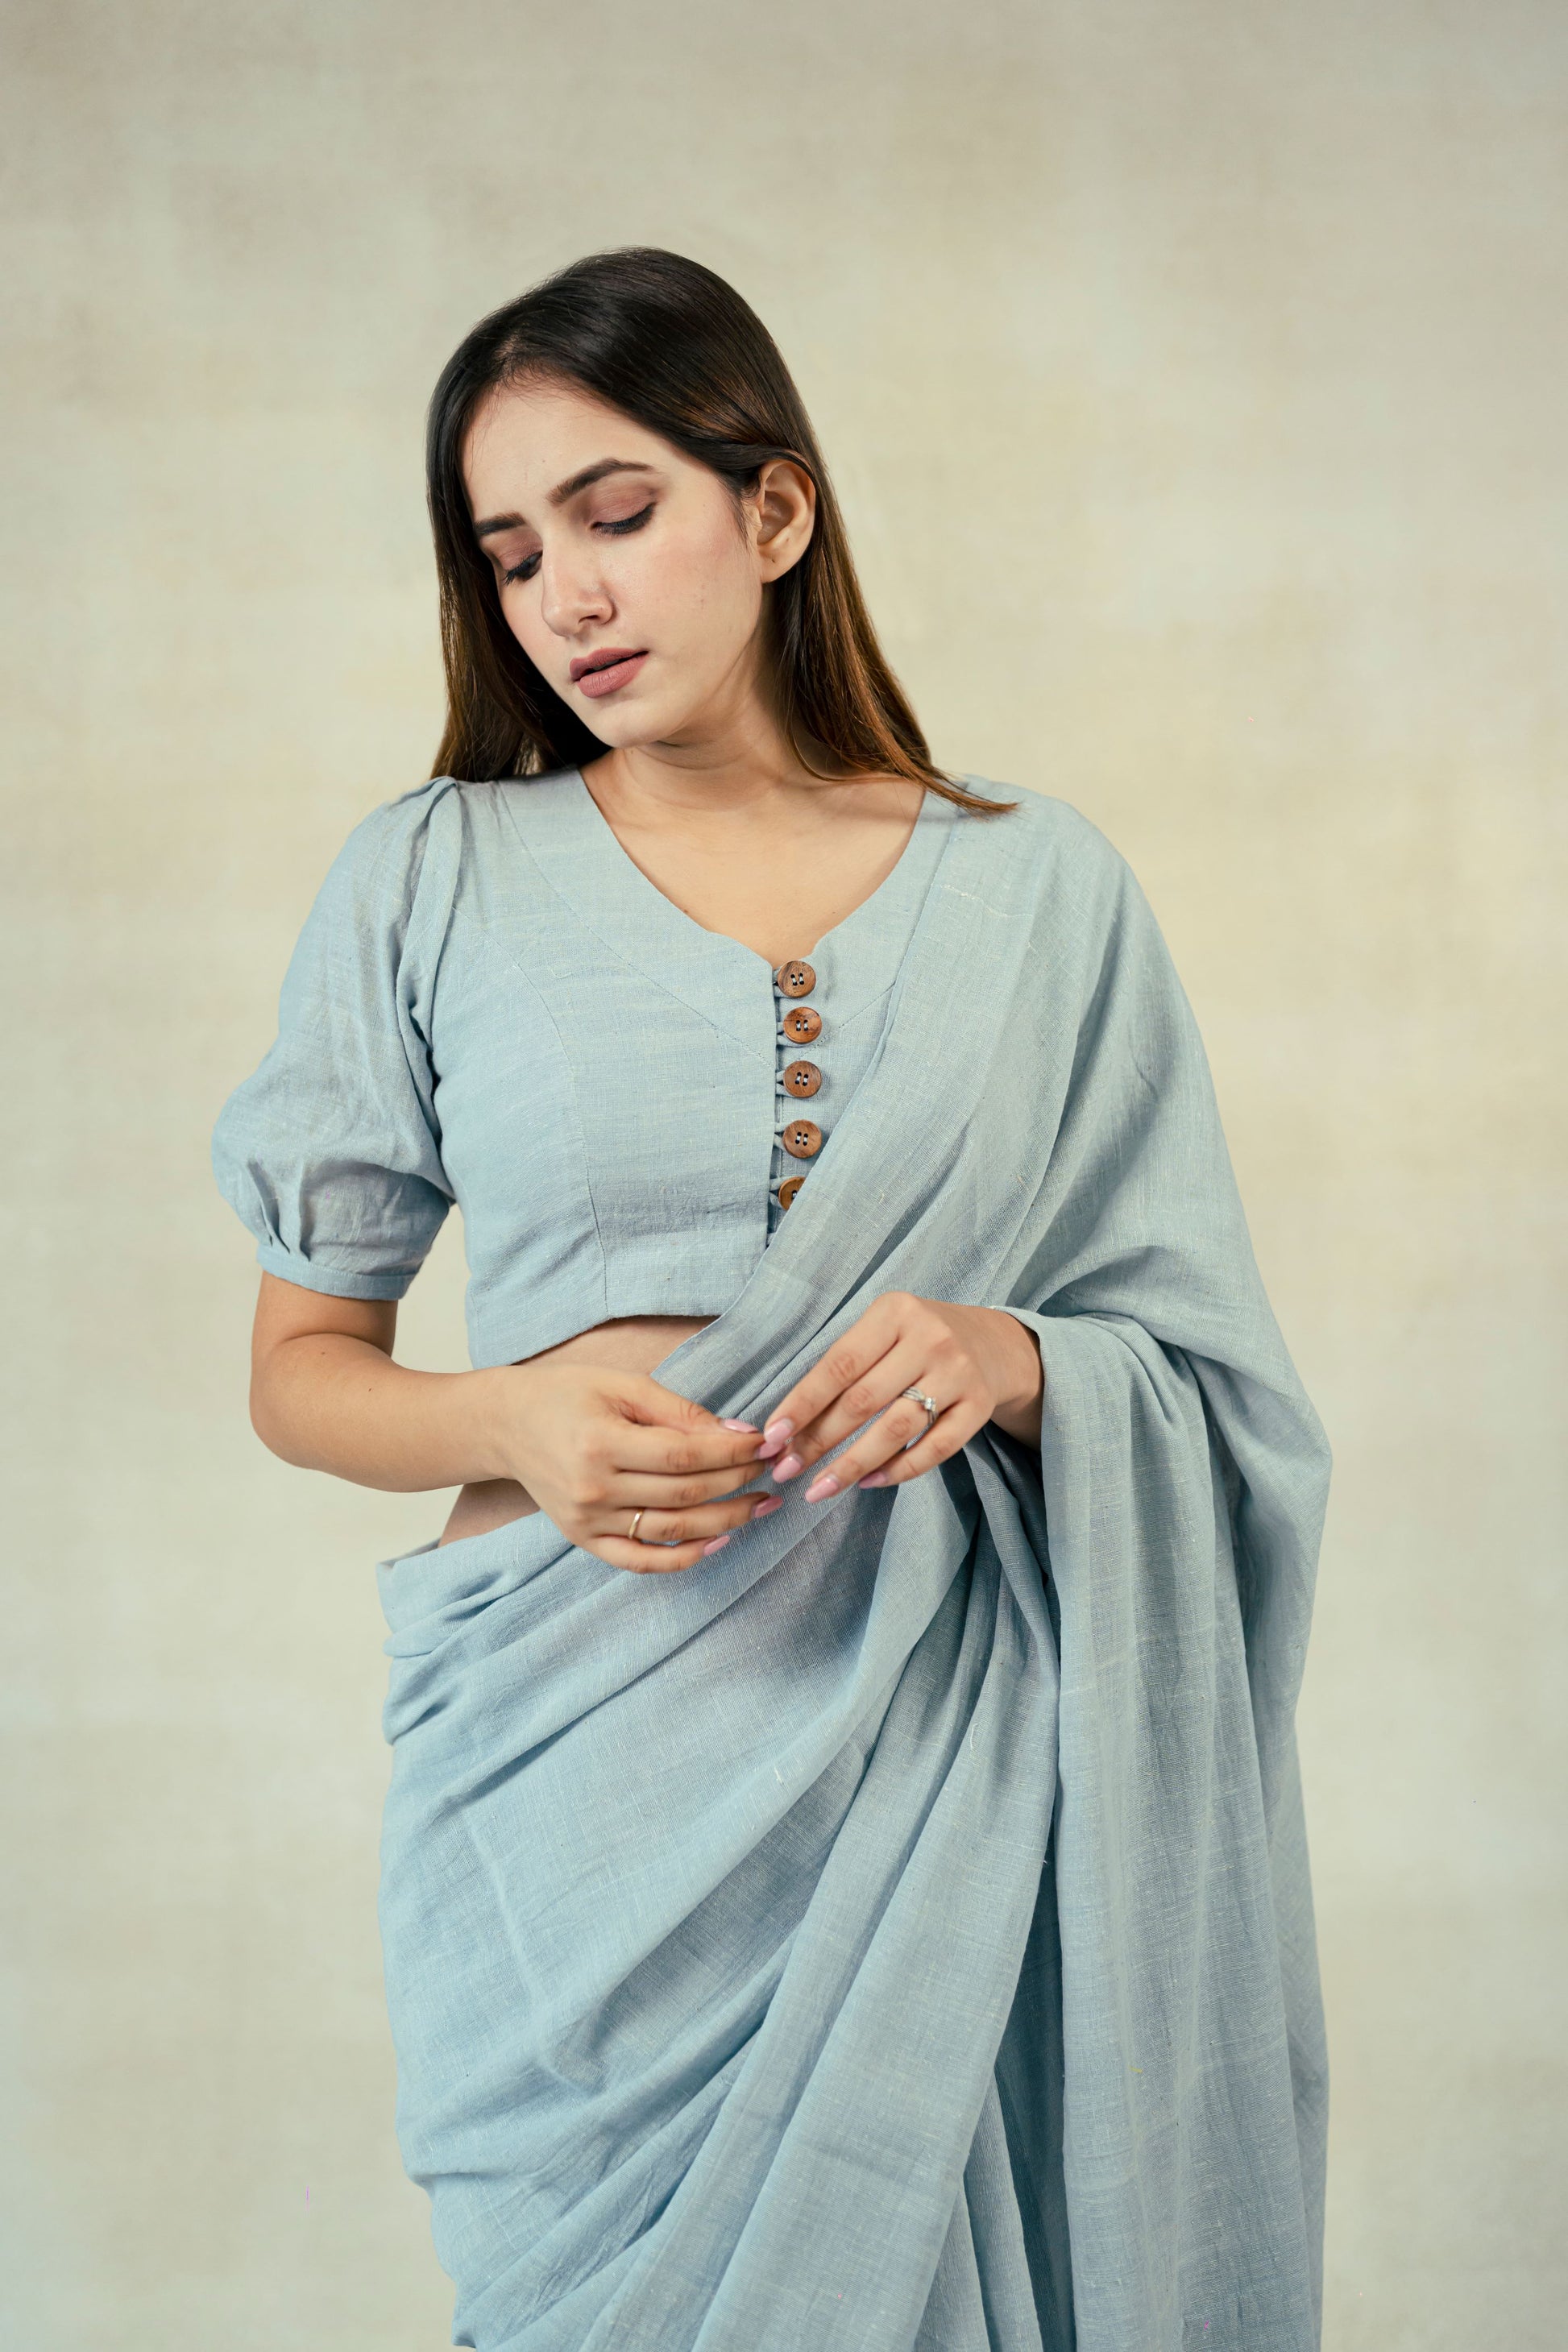 Subtle indigo handwoven organic cotton saree blouse,Handmade saree blouse, Hand spun organic cotton blouse, Slow fashion, Coord set